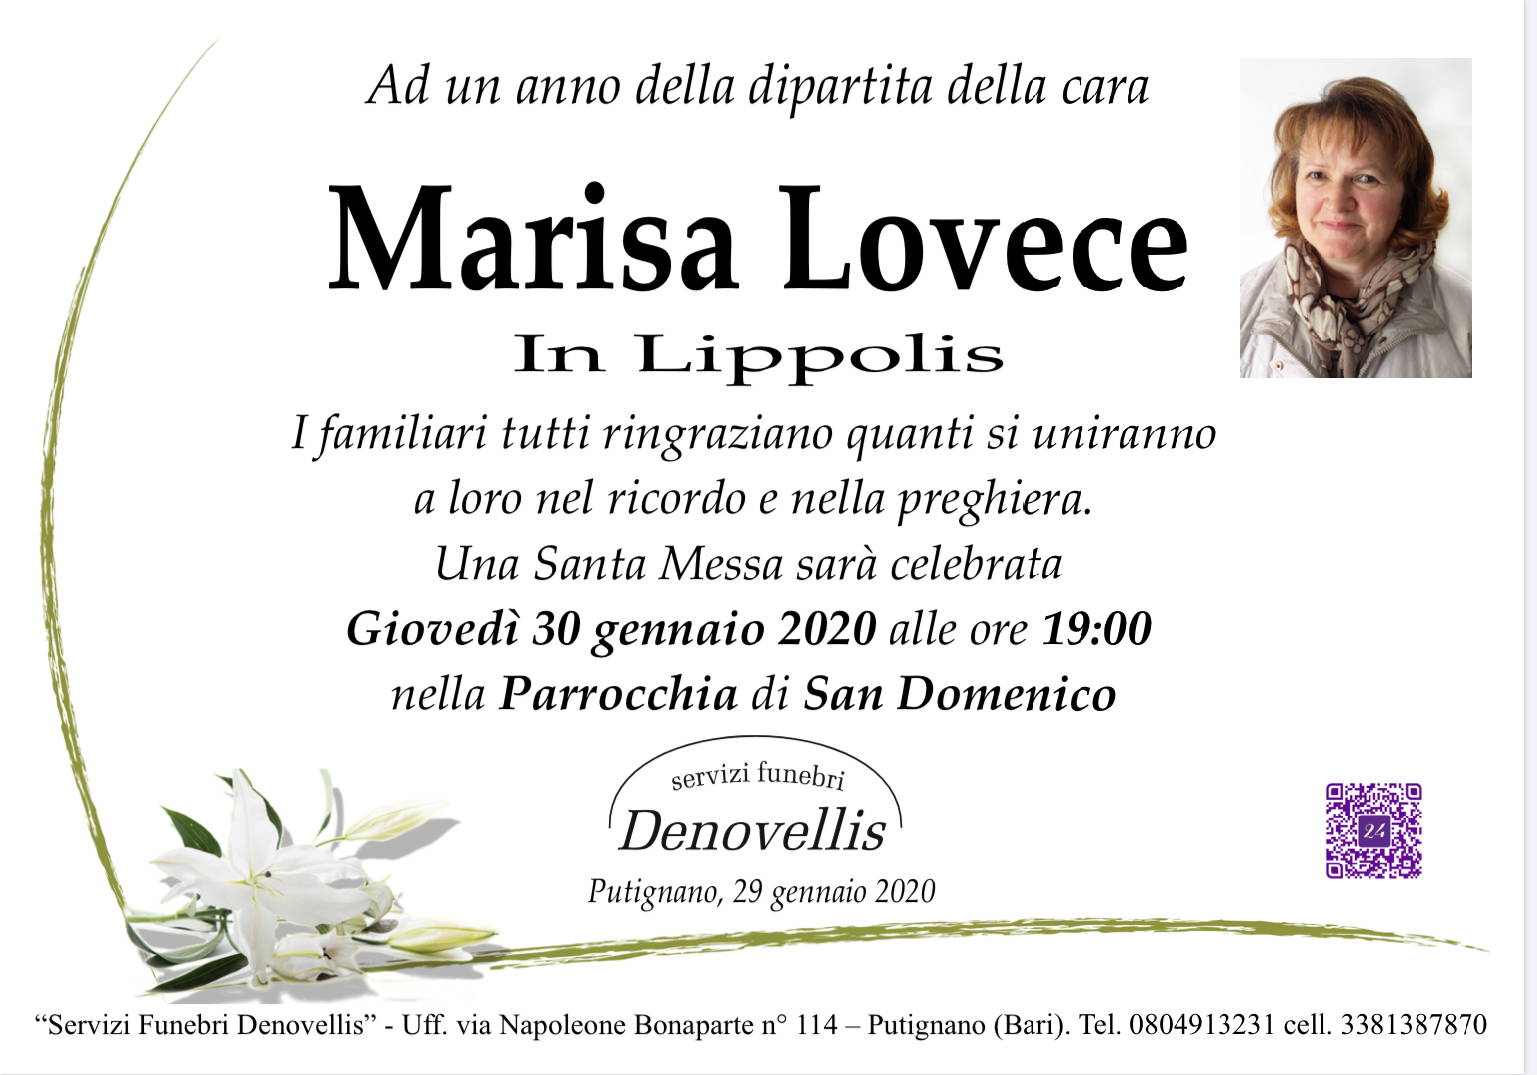 Marisa Lovece